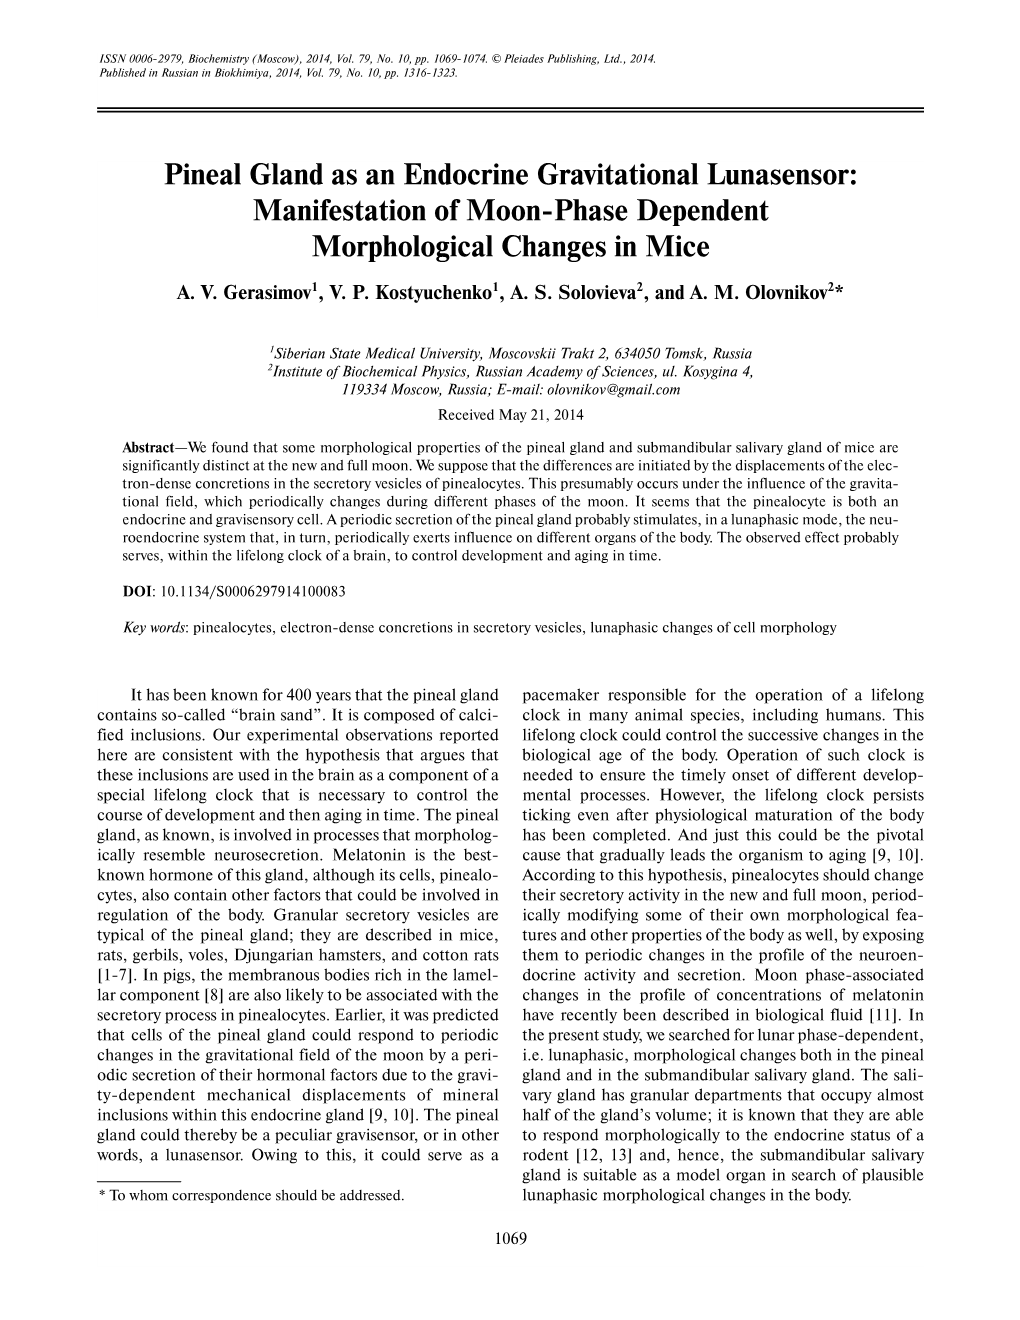 Pineal Gland As an Endocrine Gravitational Lunasensor: Manifestation of Moon-Phase Dependent Morphological Changes in Mice